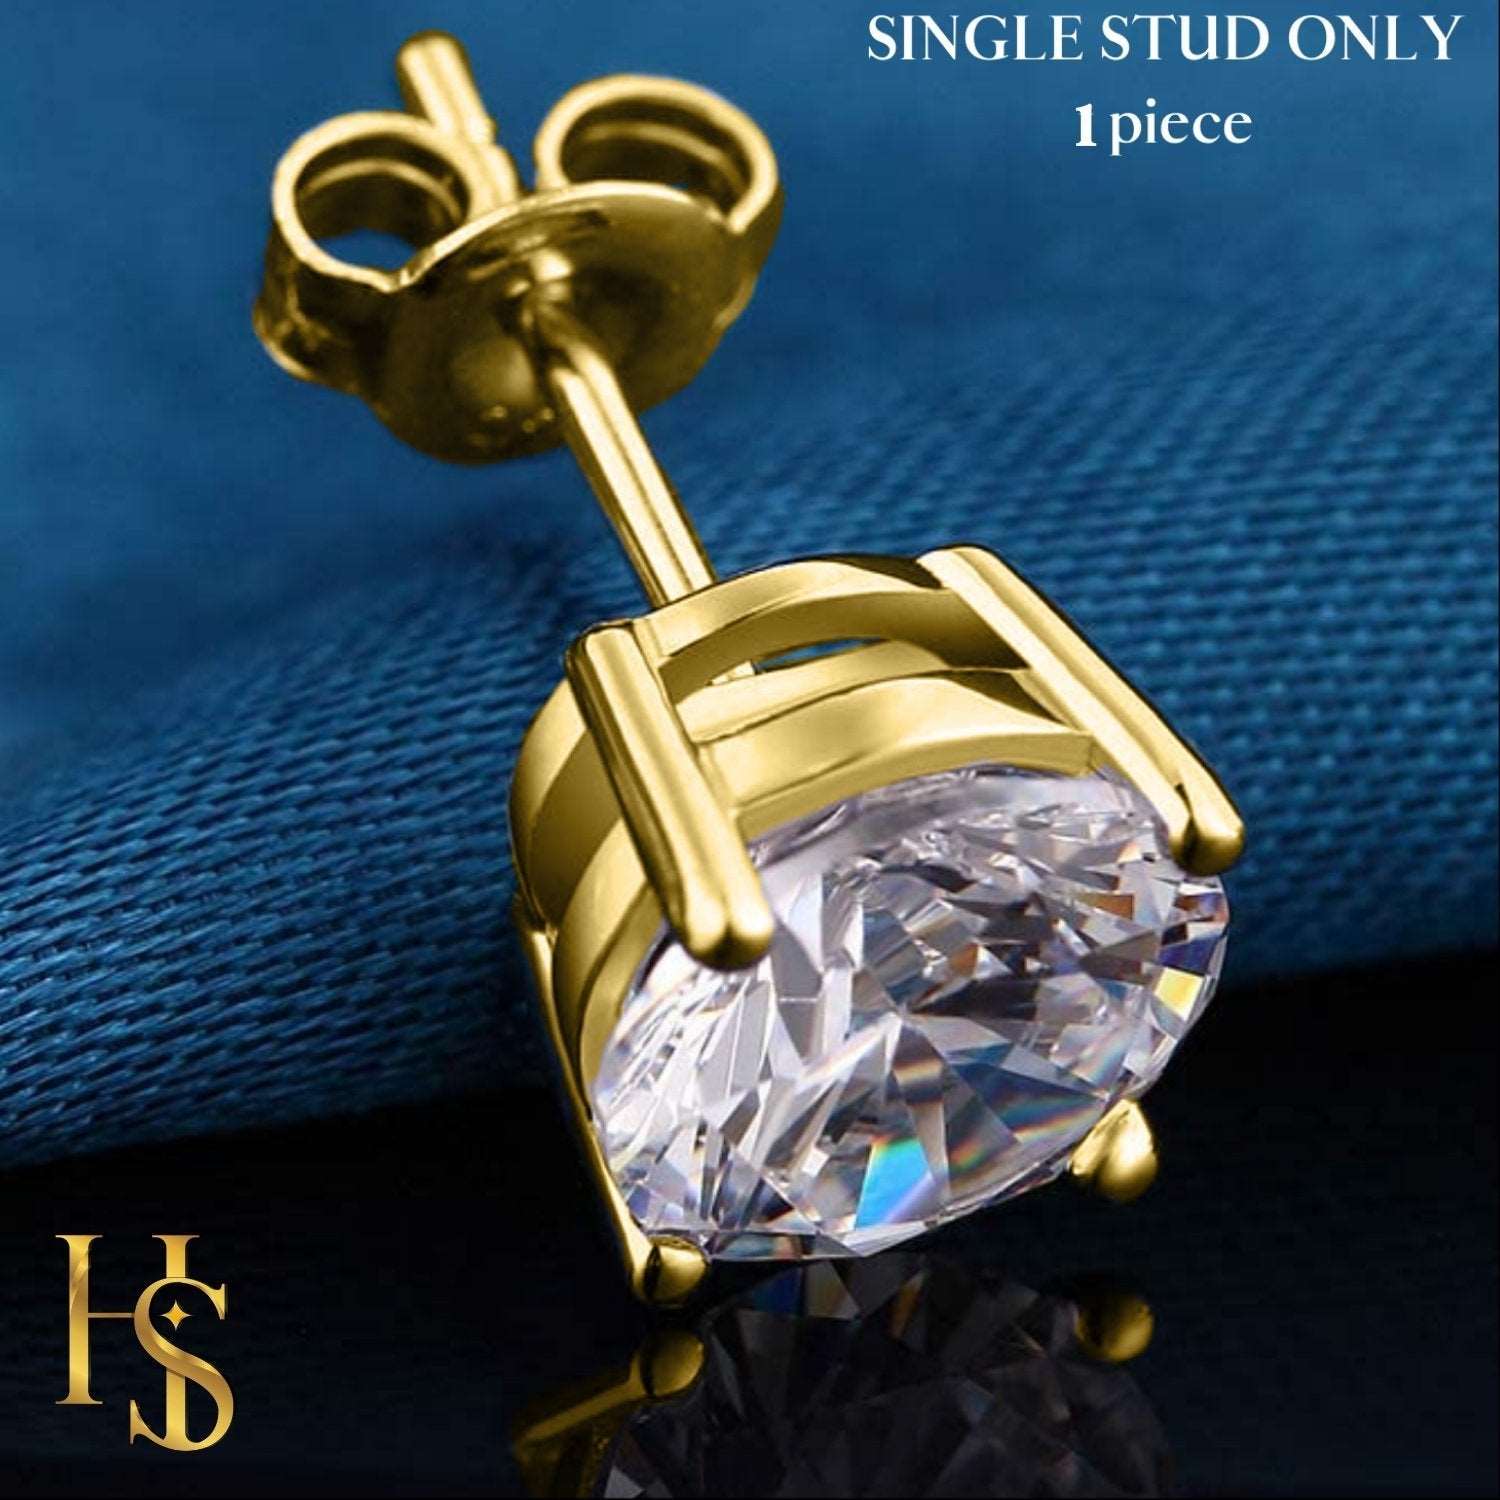 075 CT Lab Grown Diamond Solitaire Earrings  Manish Jewels Dubai